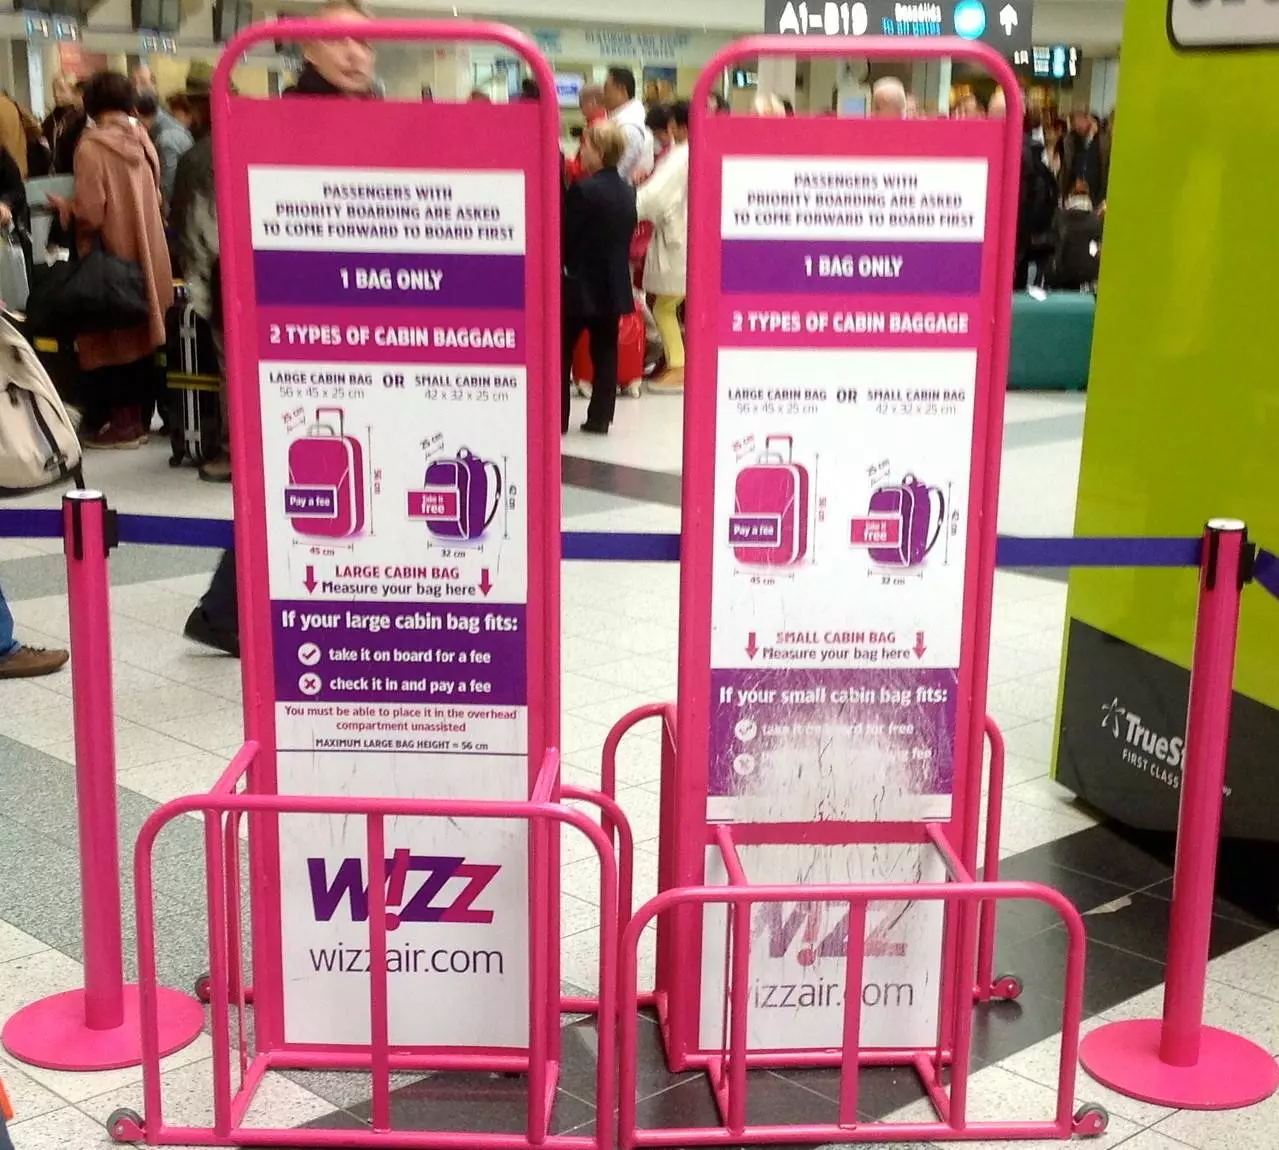 Правила провоза багажа и ручной клади у авиакомпании wizz air